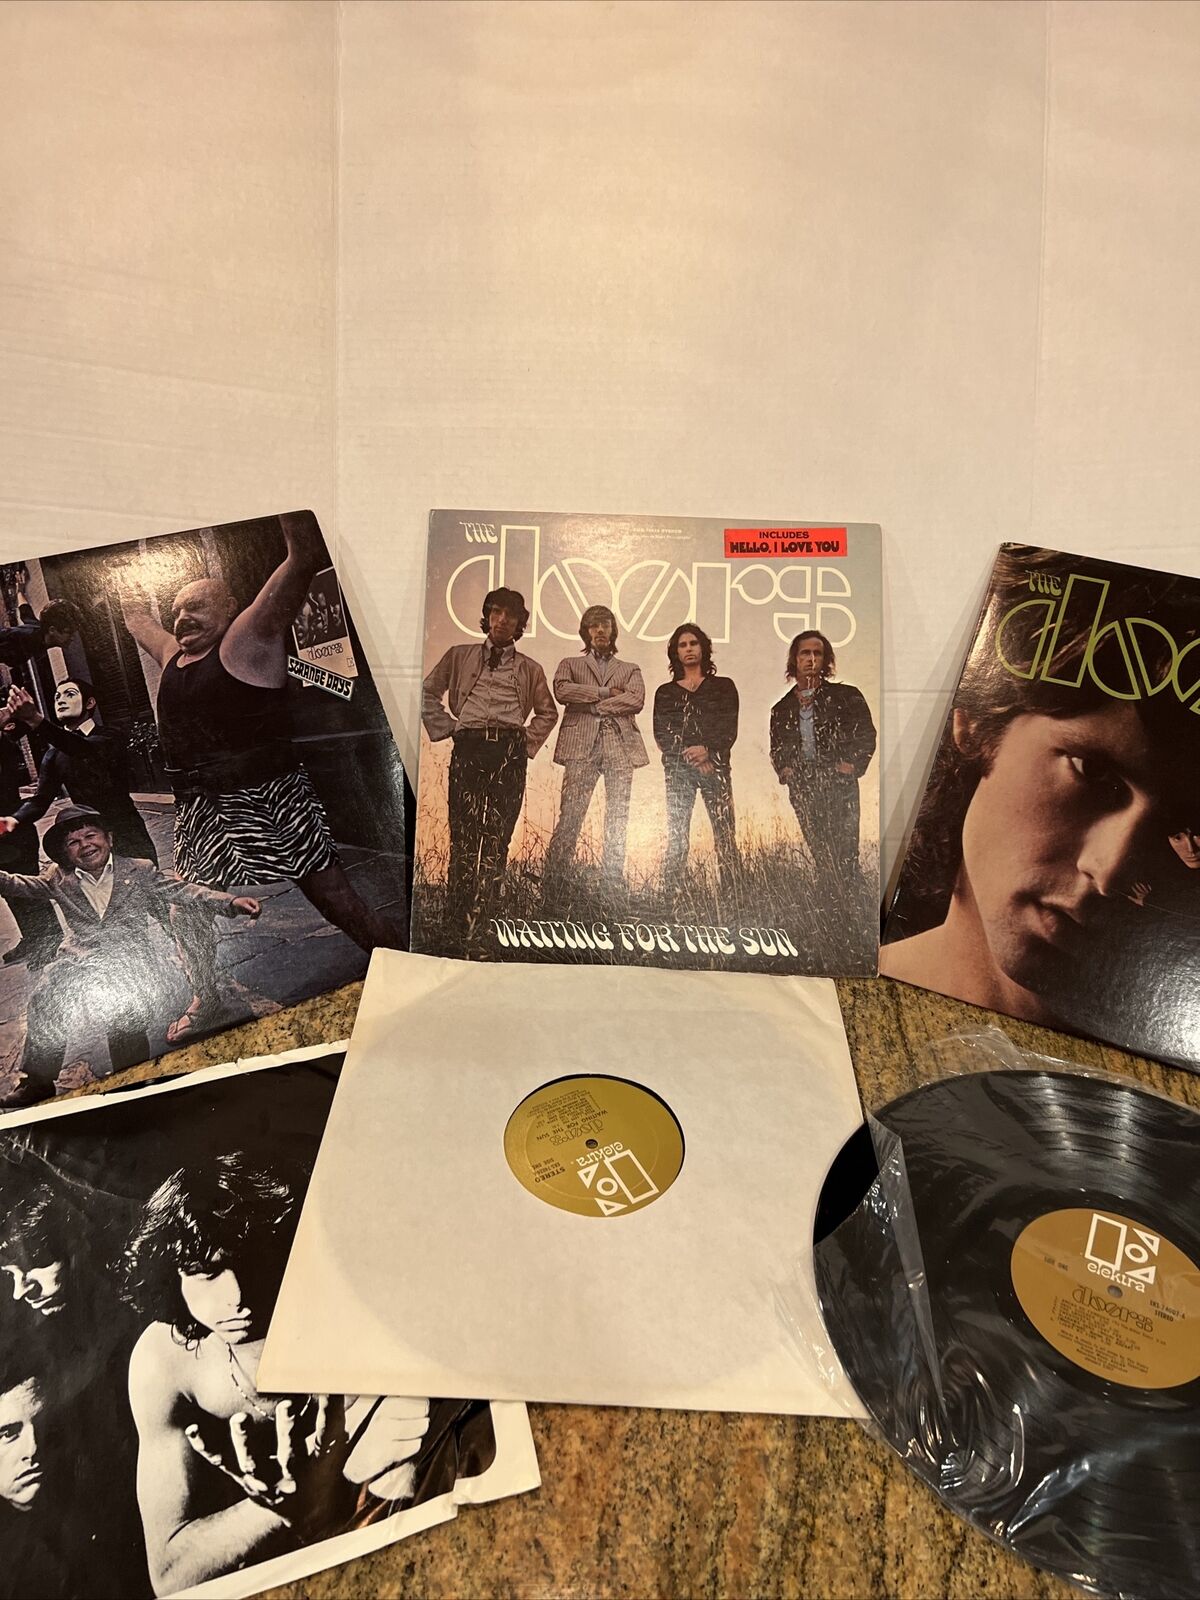 THE DOORS - WAITING FOR THE SUN Vinyl LP Elektra EKS-74024 Gold Lot of 3 Vinyls